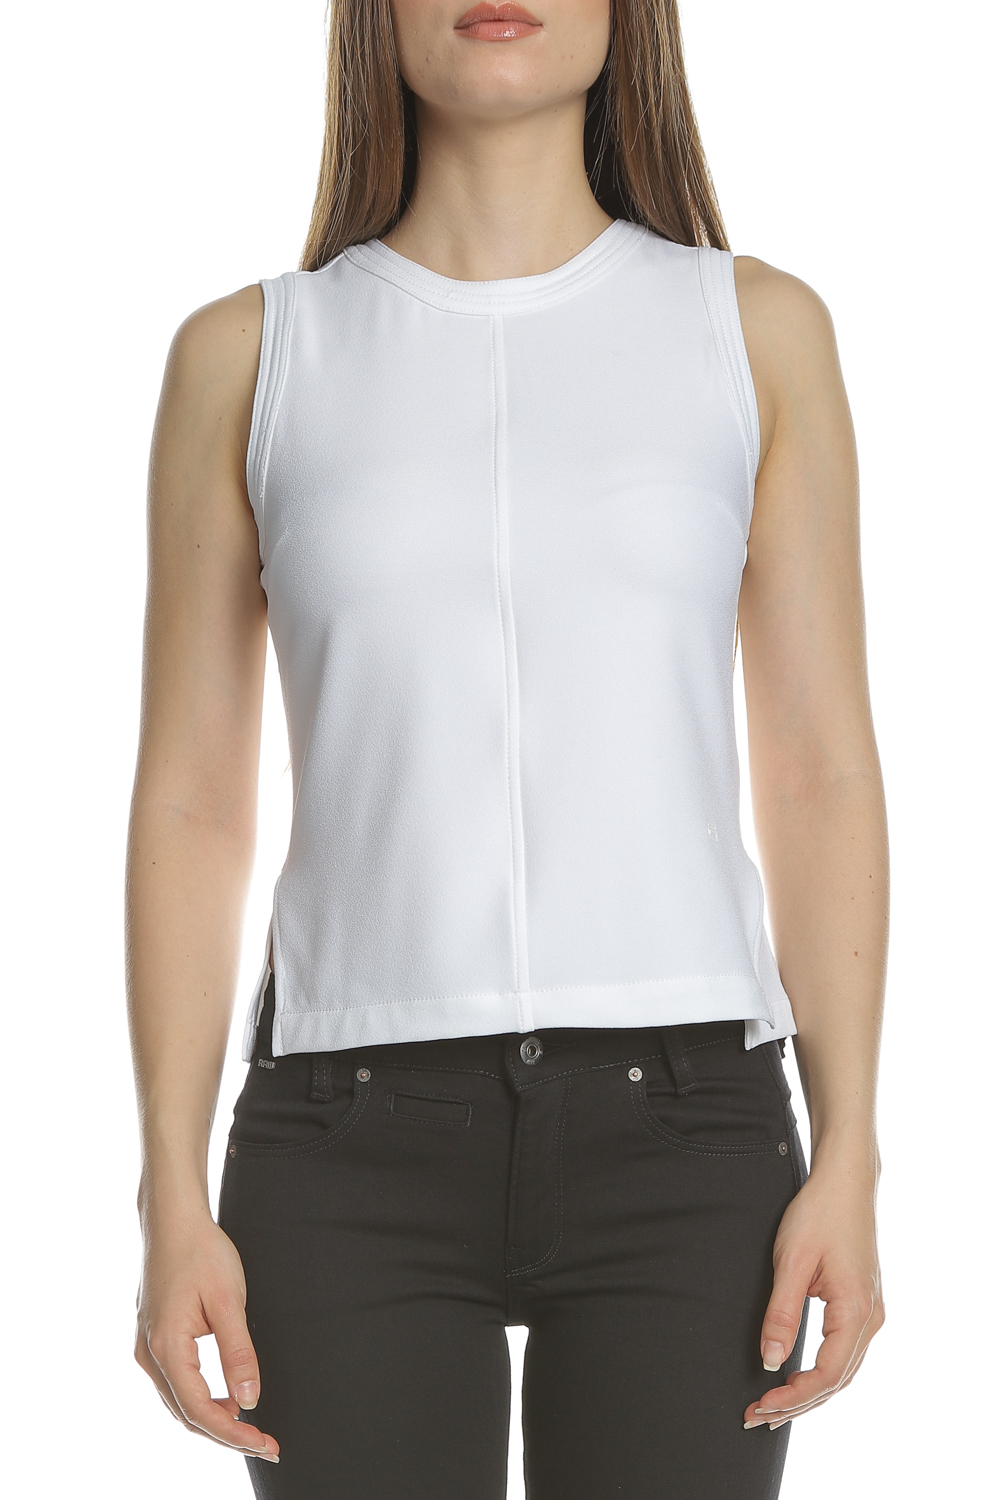 G-STAR - Γυναικεία αμάνικη μπλούζα DELINE λευκή Γυναικεία/Ρούχα/Μπλούζες/Αμάνικες